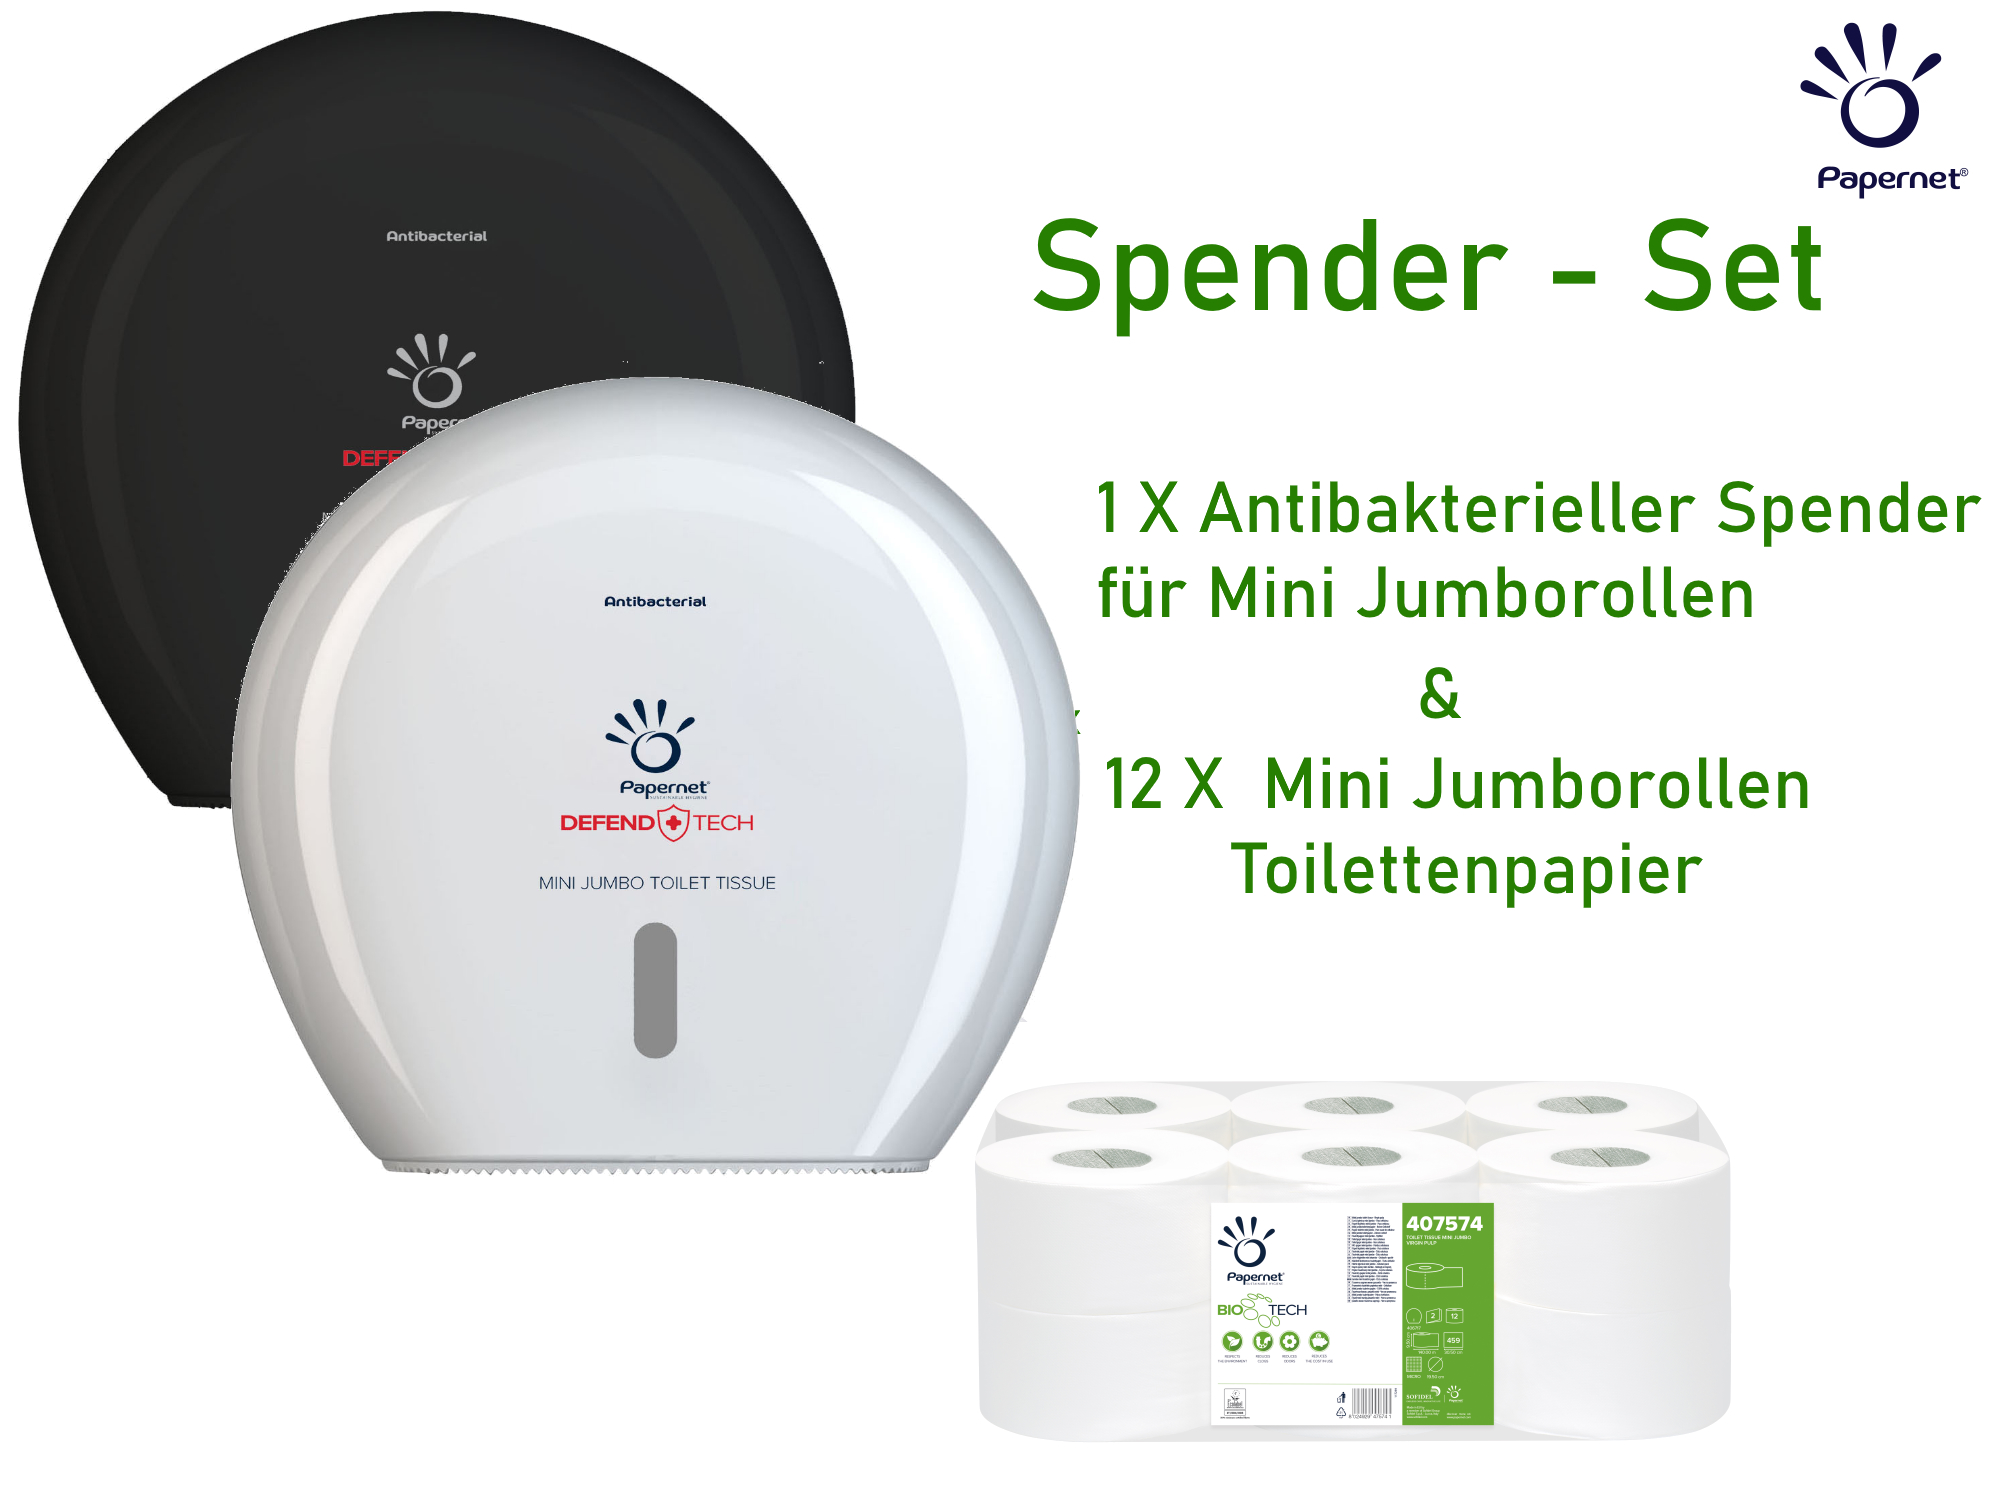 Spender SET: Papernet Toilettenpapierspender für Mini Jumborollen - schwarz & Toilettenpapier